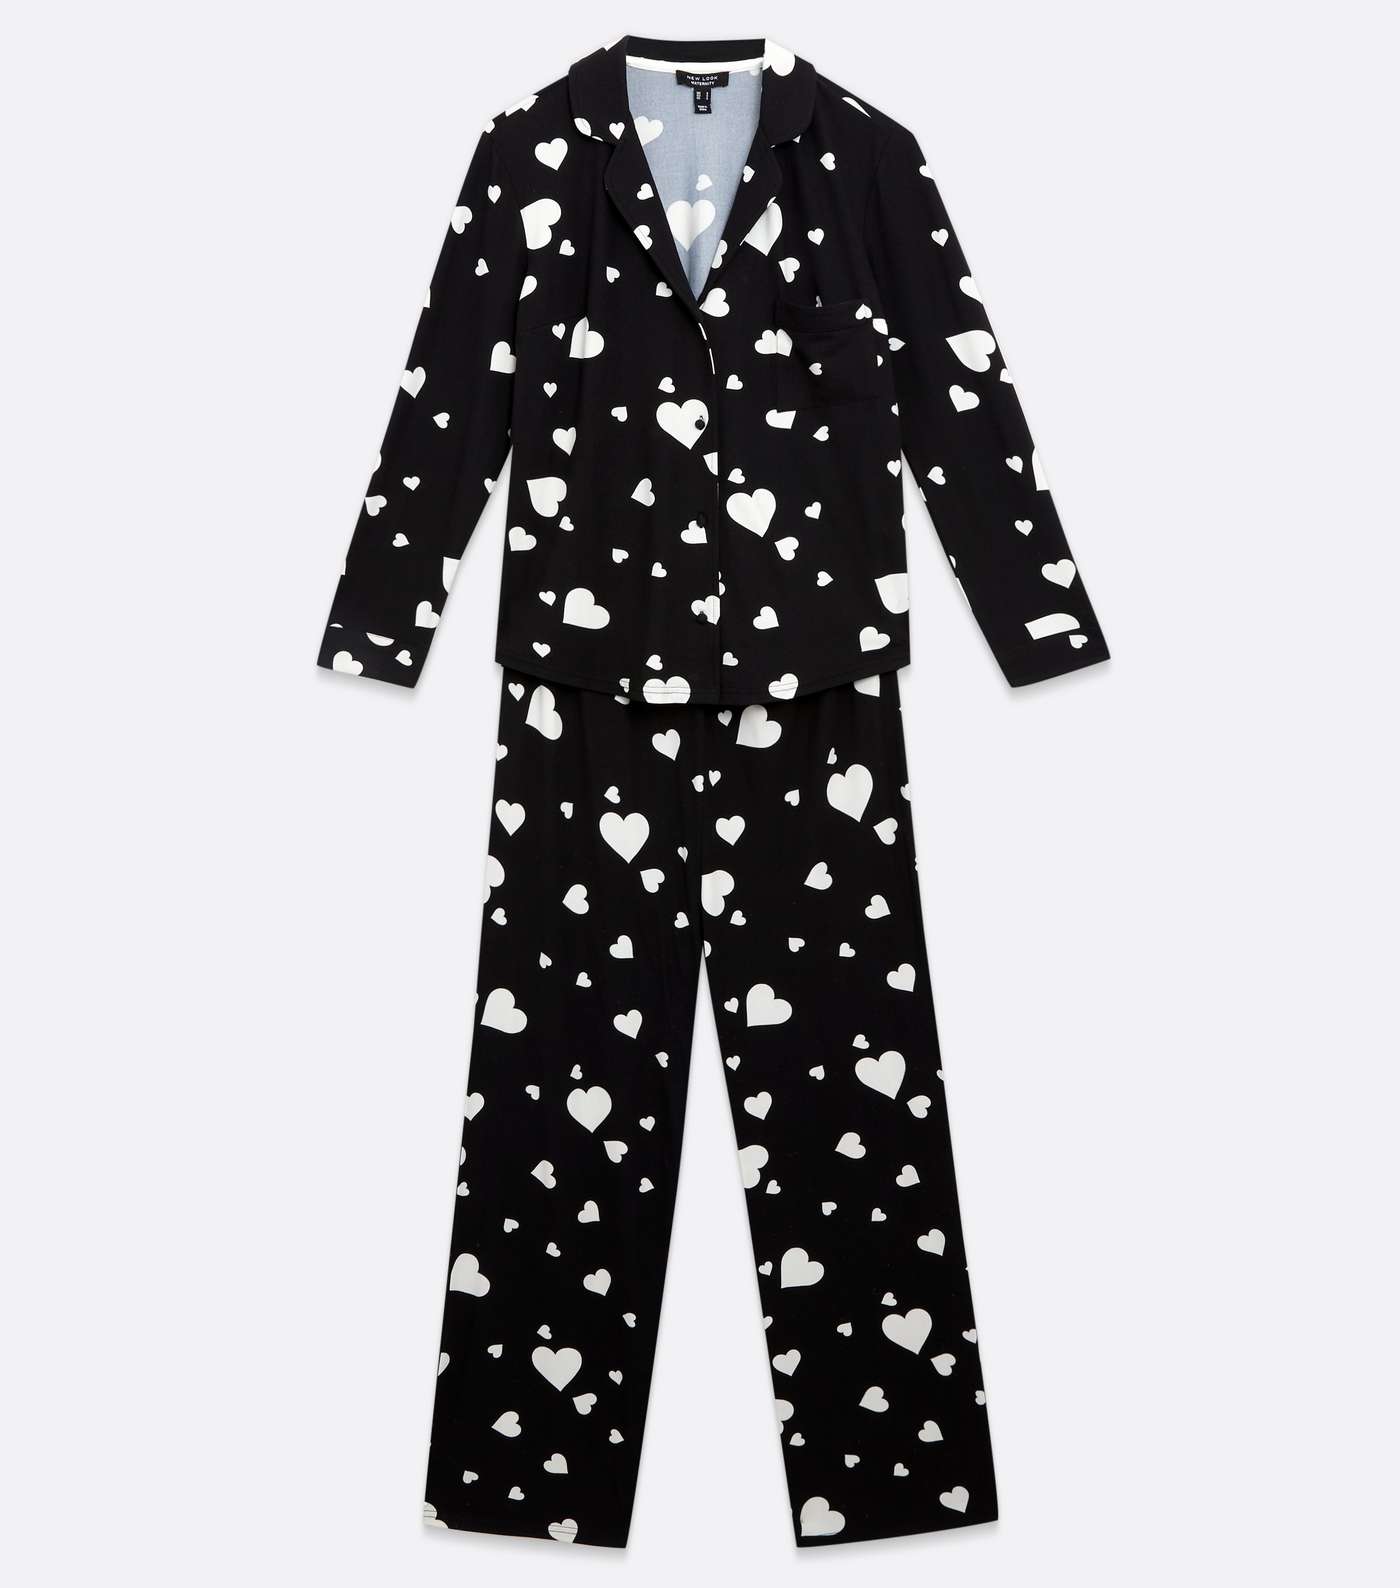 Maternity Black Heart Soft Touch Matching Family Pyjama Set Image 5